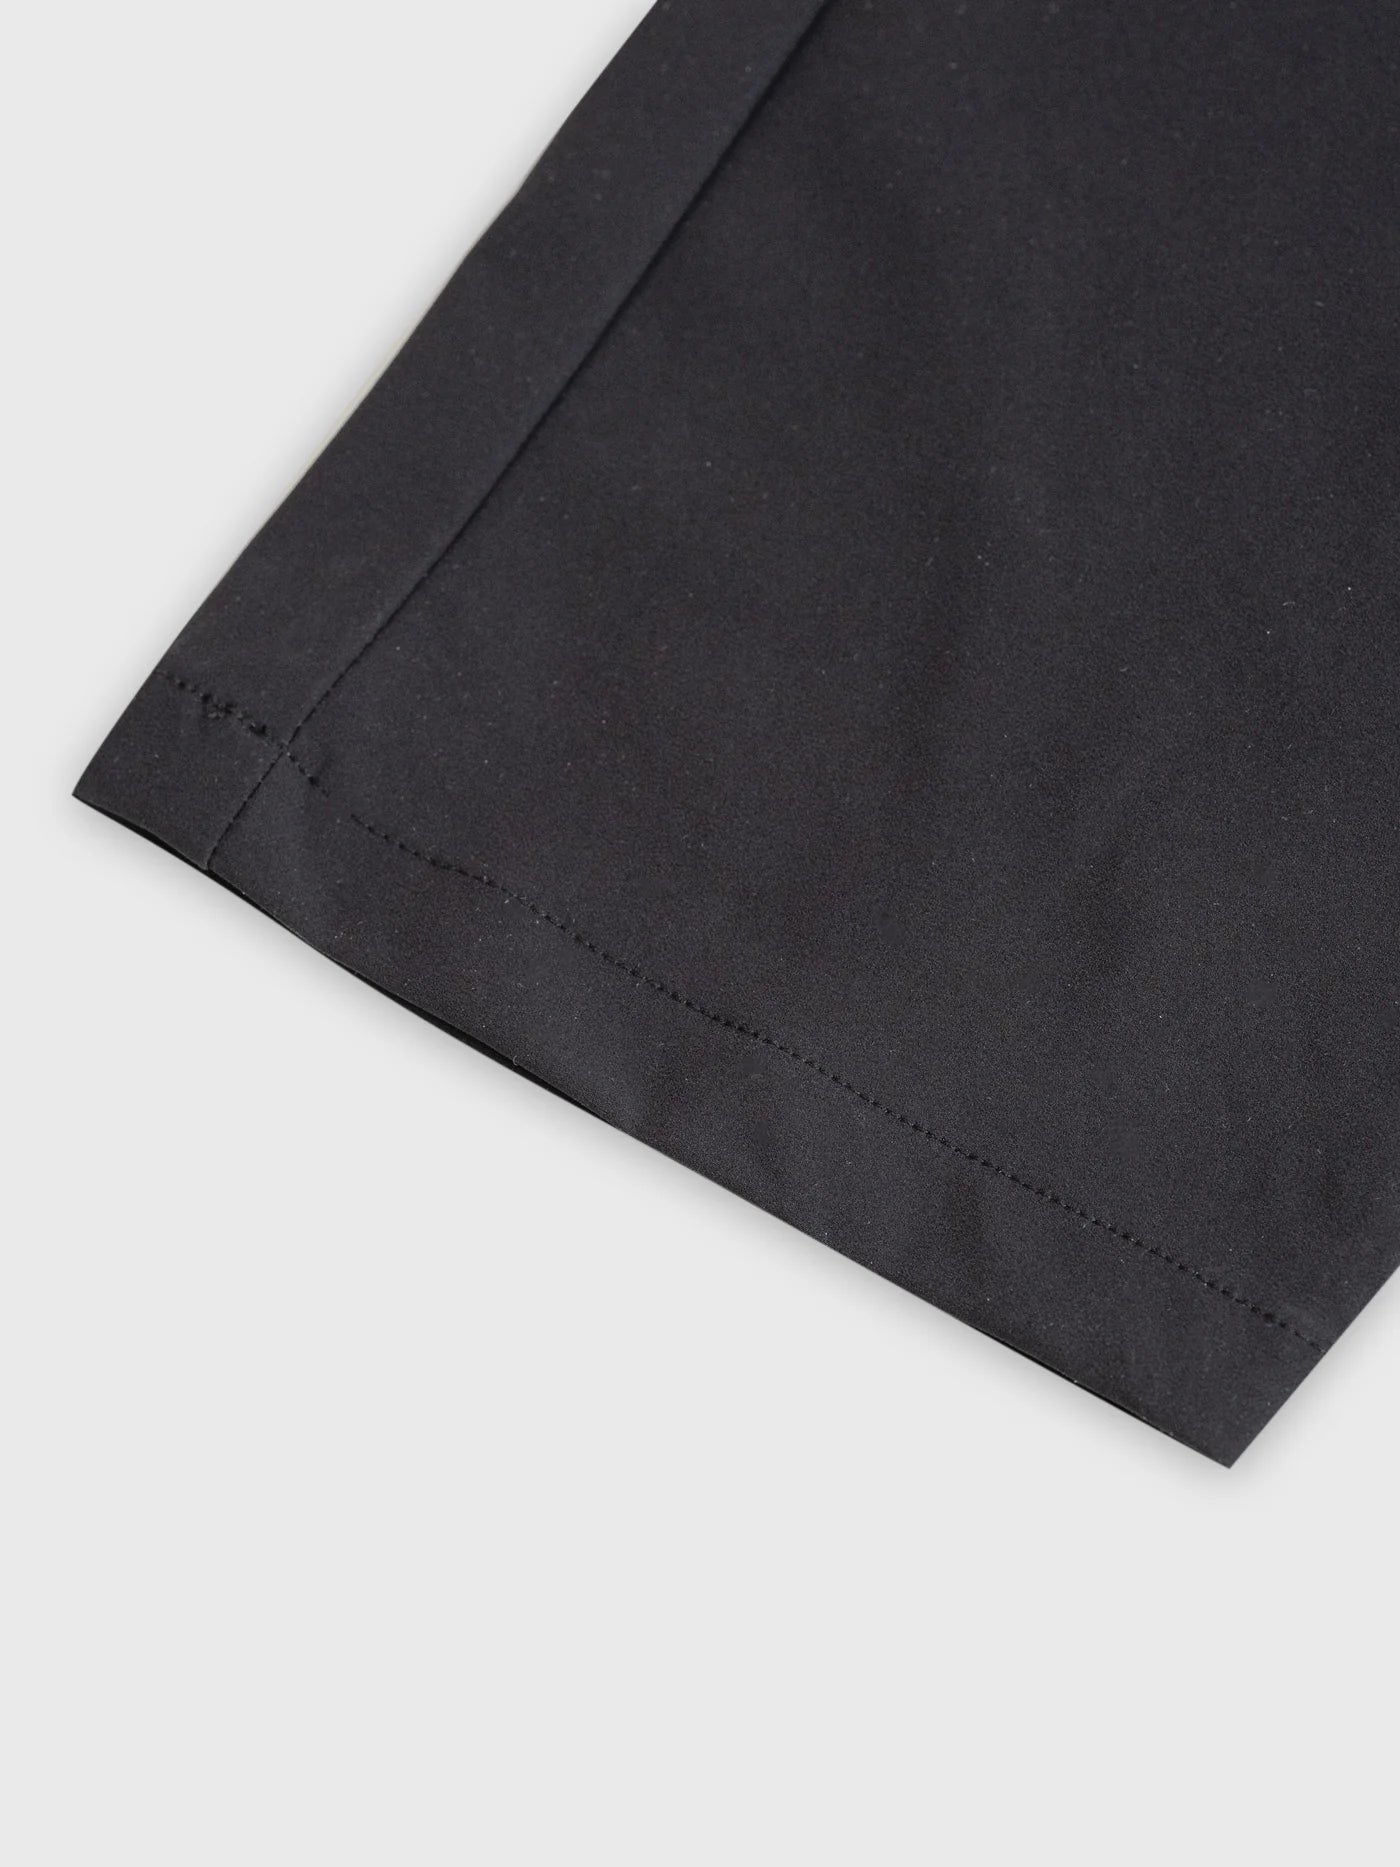 Mersino Originale | Zwart Stretch Pantalon Broek